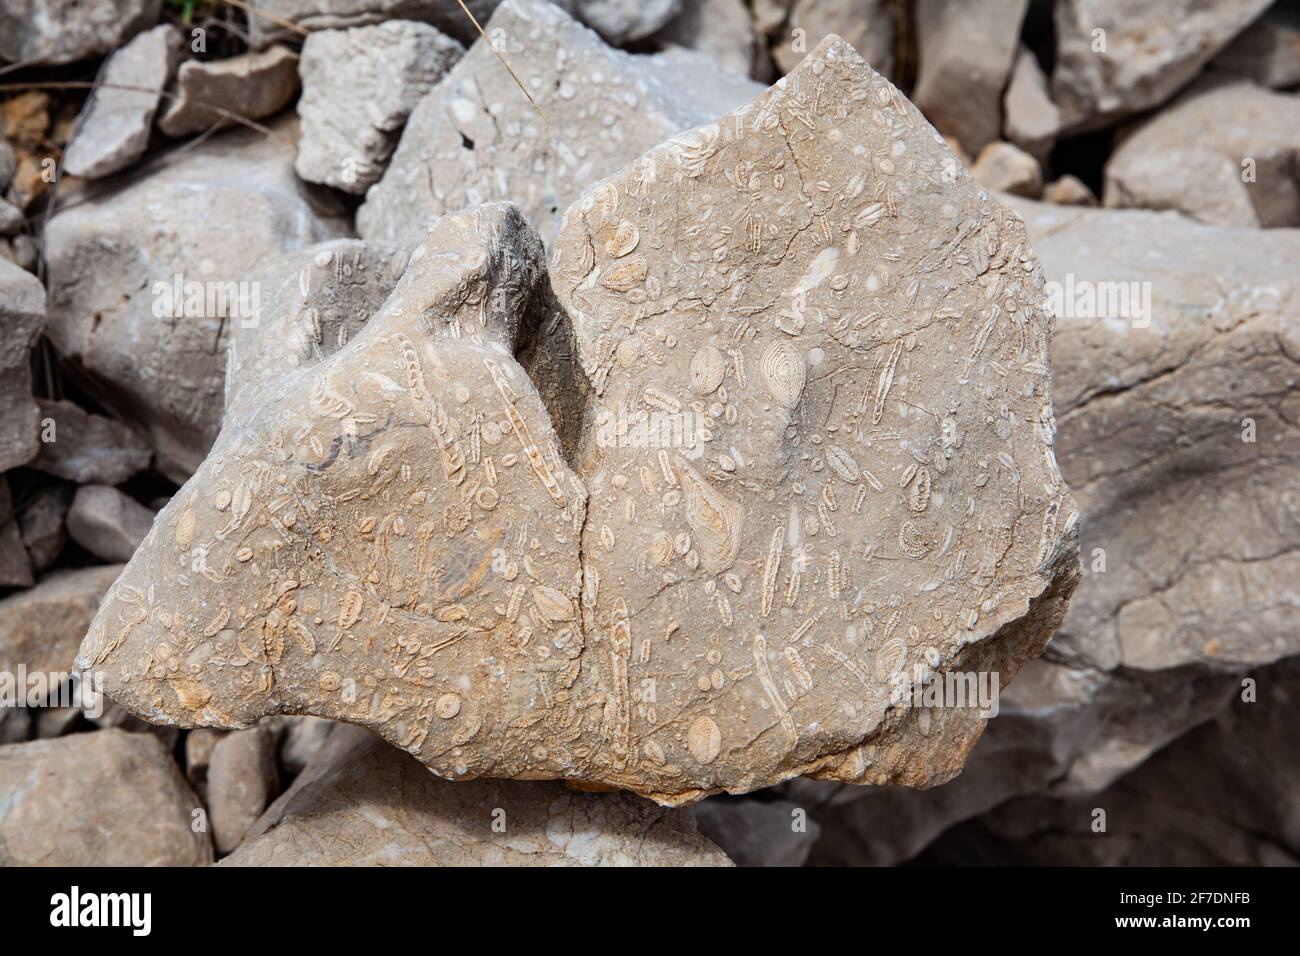 A limestone rock with seashell fossils from Croatian island Krk Stock Photo